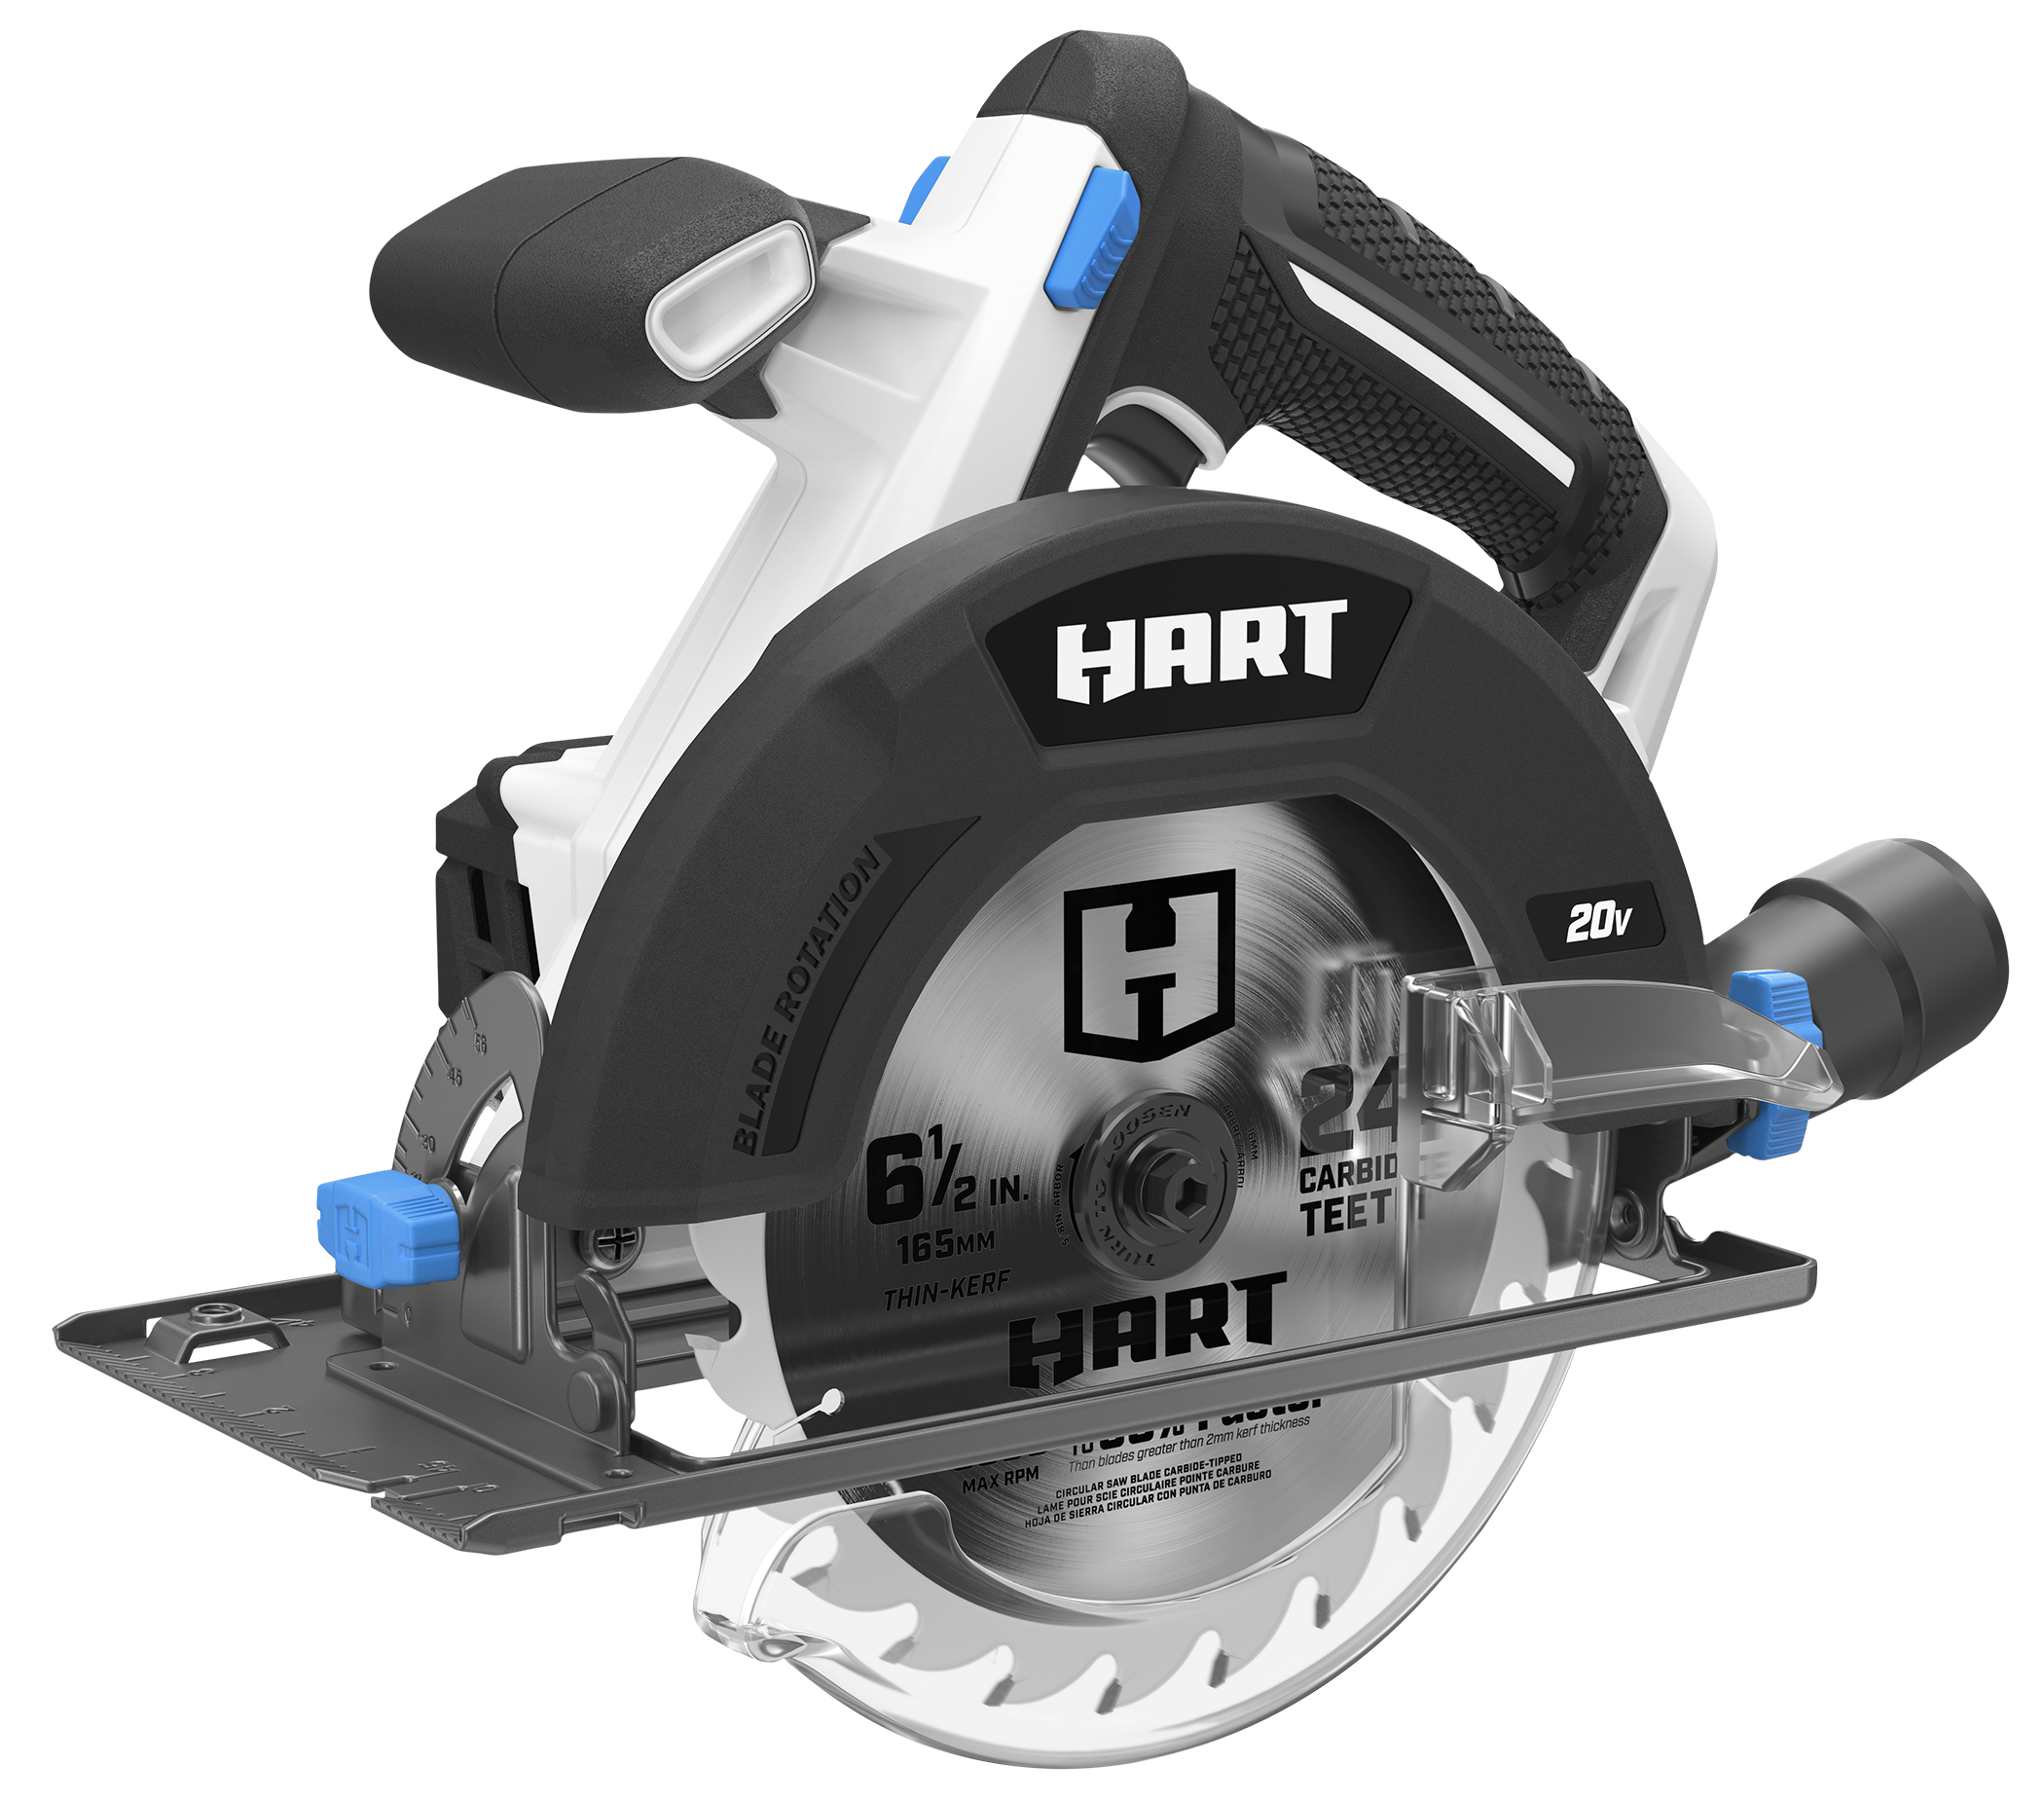 HART 20-Volt 6 1/2-inch Cordless Circular Saw Kit (1) 20-Volt 4.0Ah Lithium-Ion Battery - image 1 of 10